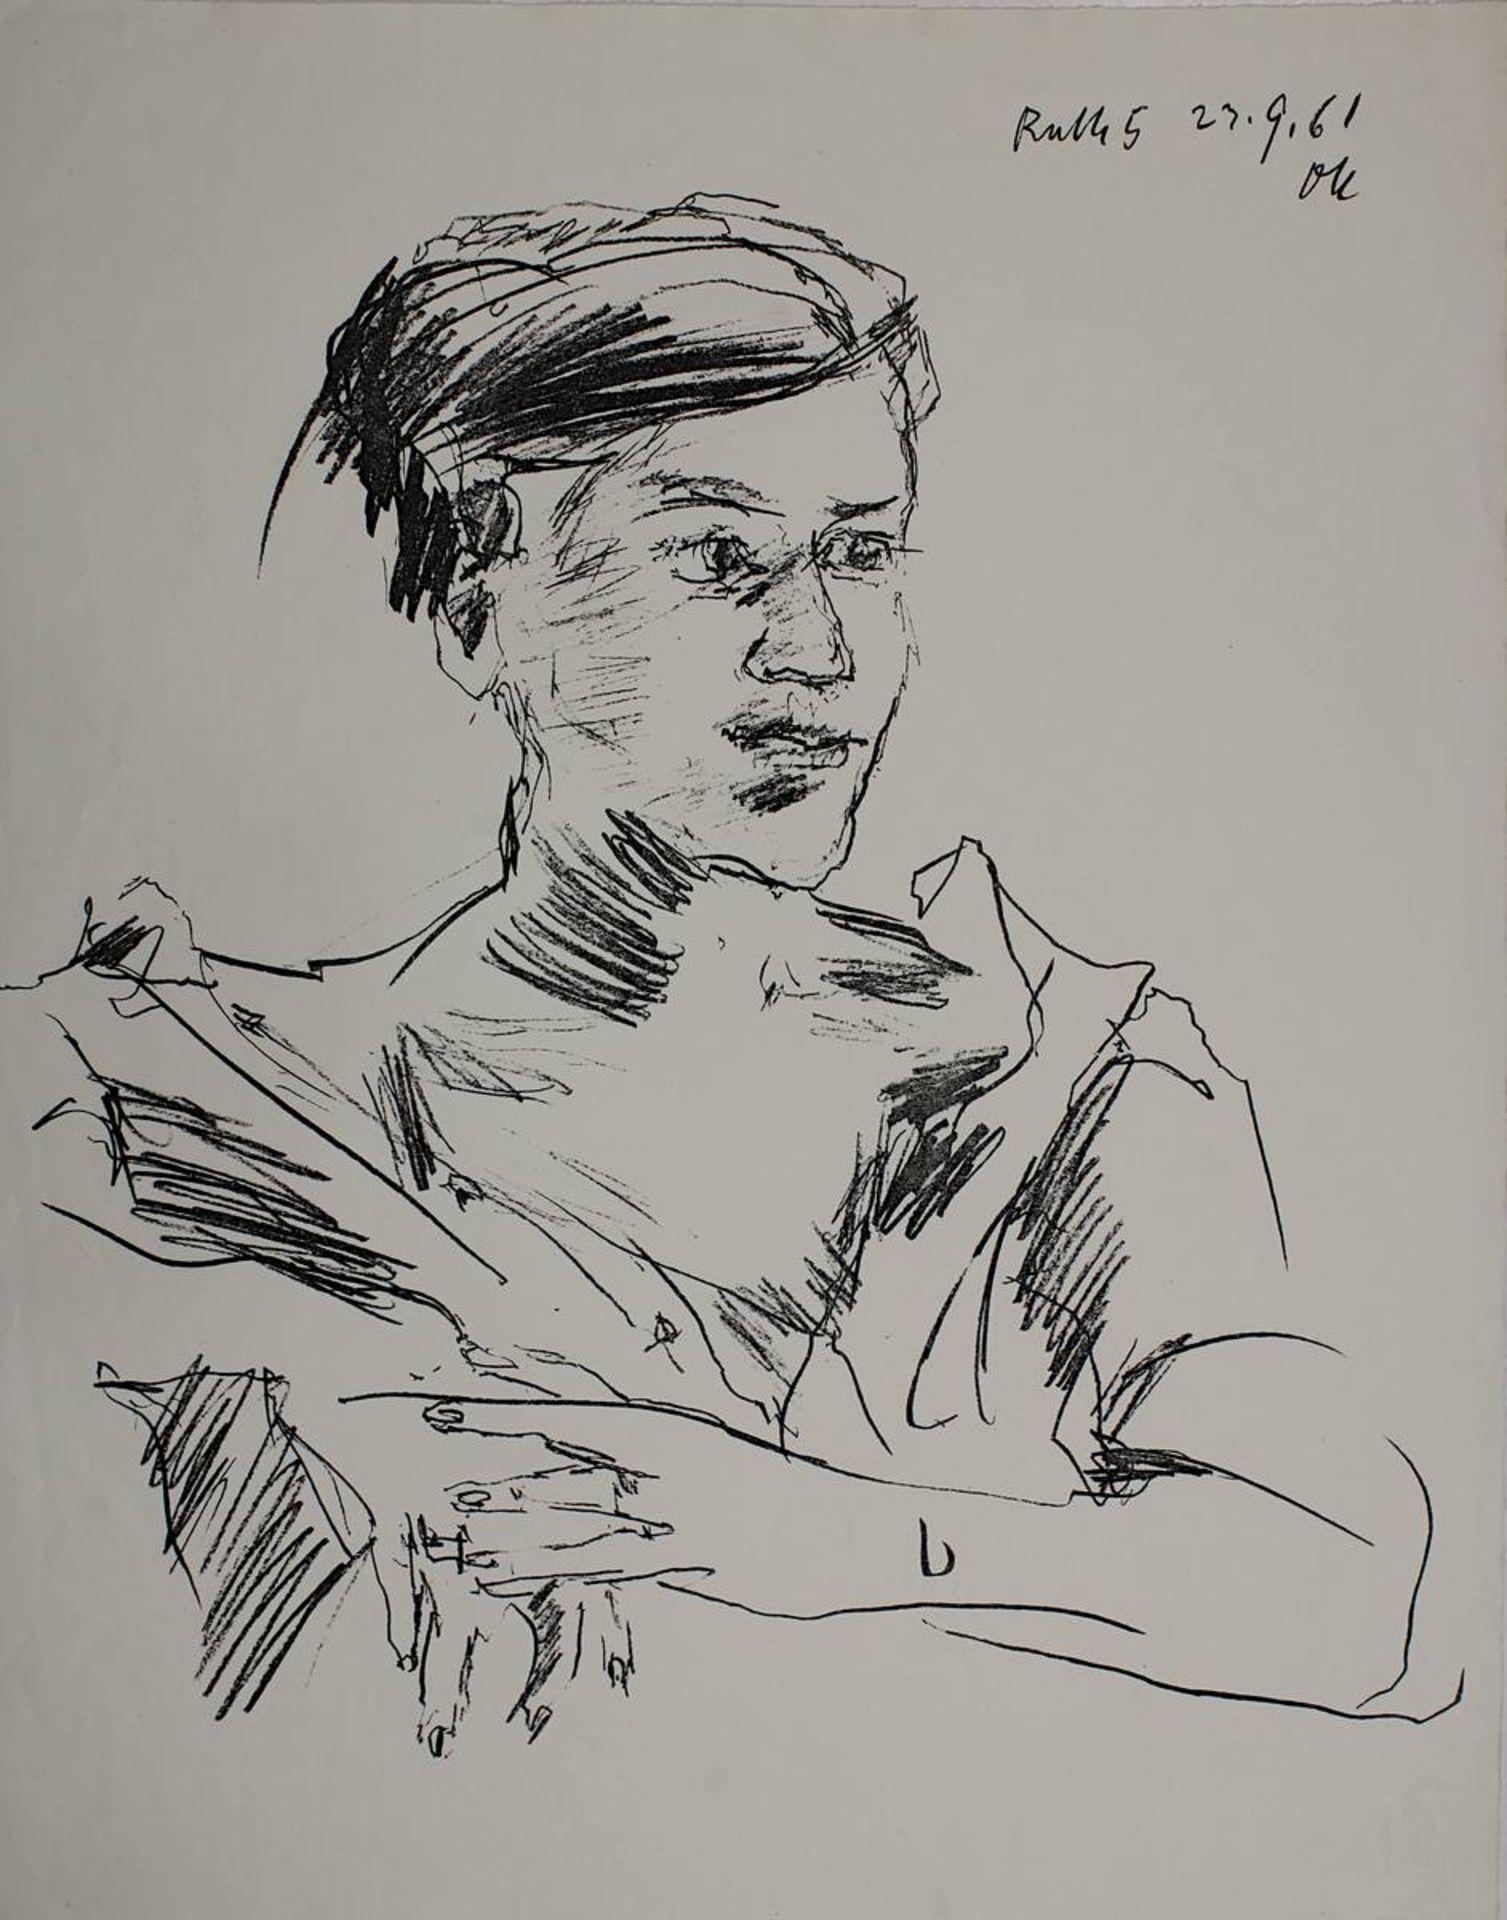 Kokoschka, Oskar ( Pöchlarn 1886 - 1980 Montreux) "Ruth 5", Lithographie, am oberen Rand im Stein